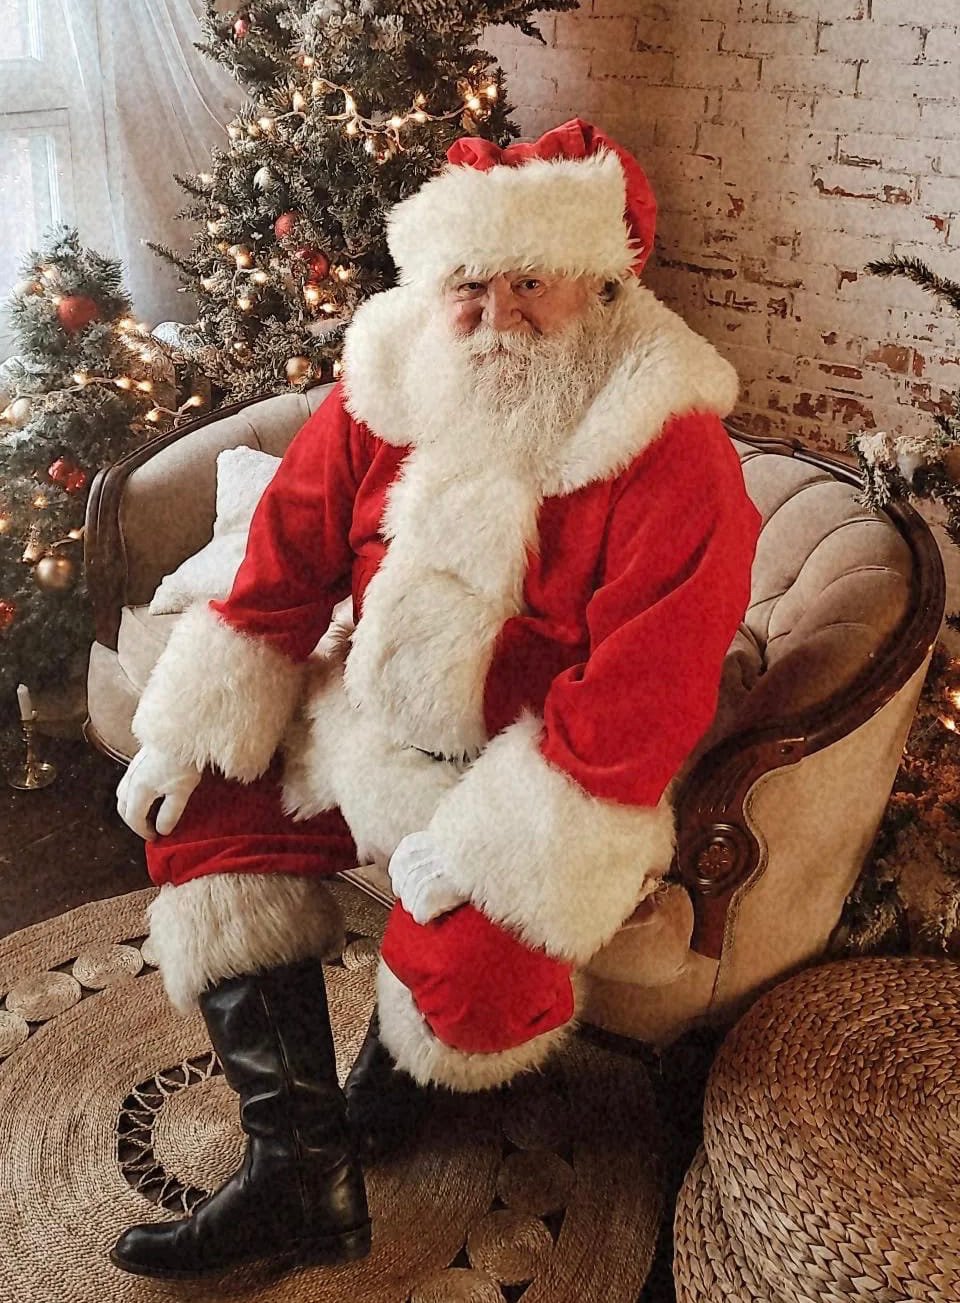 Edmonton's Santa Claus - on everyone's "nice" list since 1989!